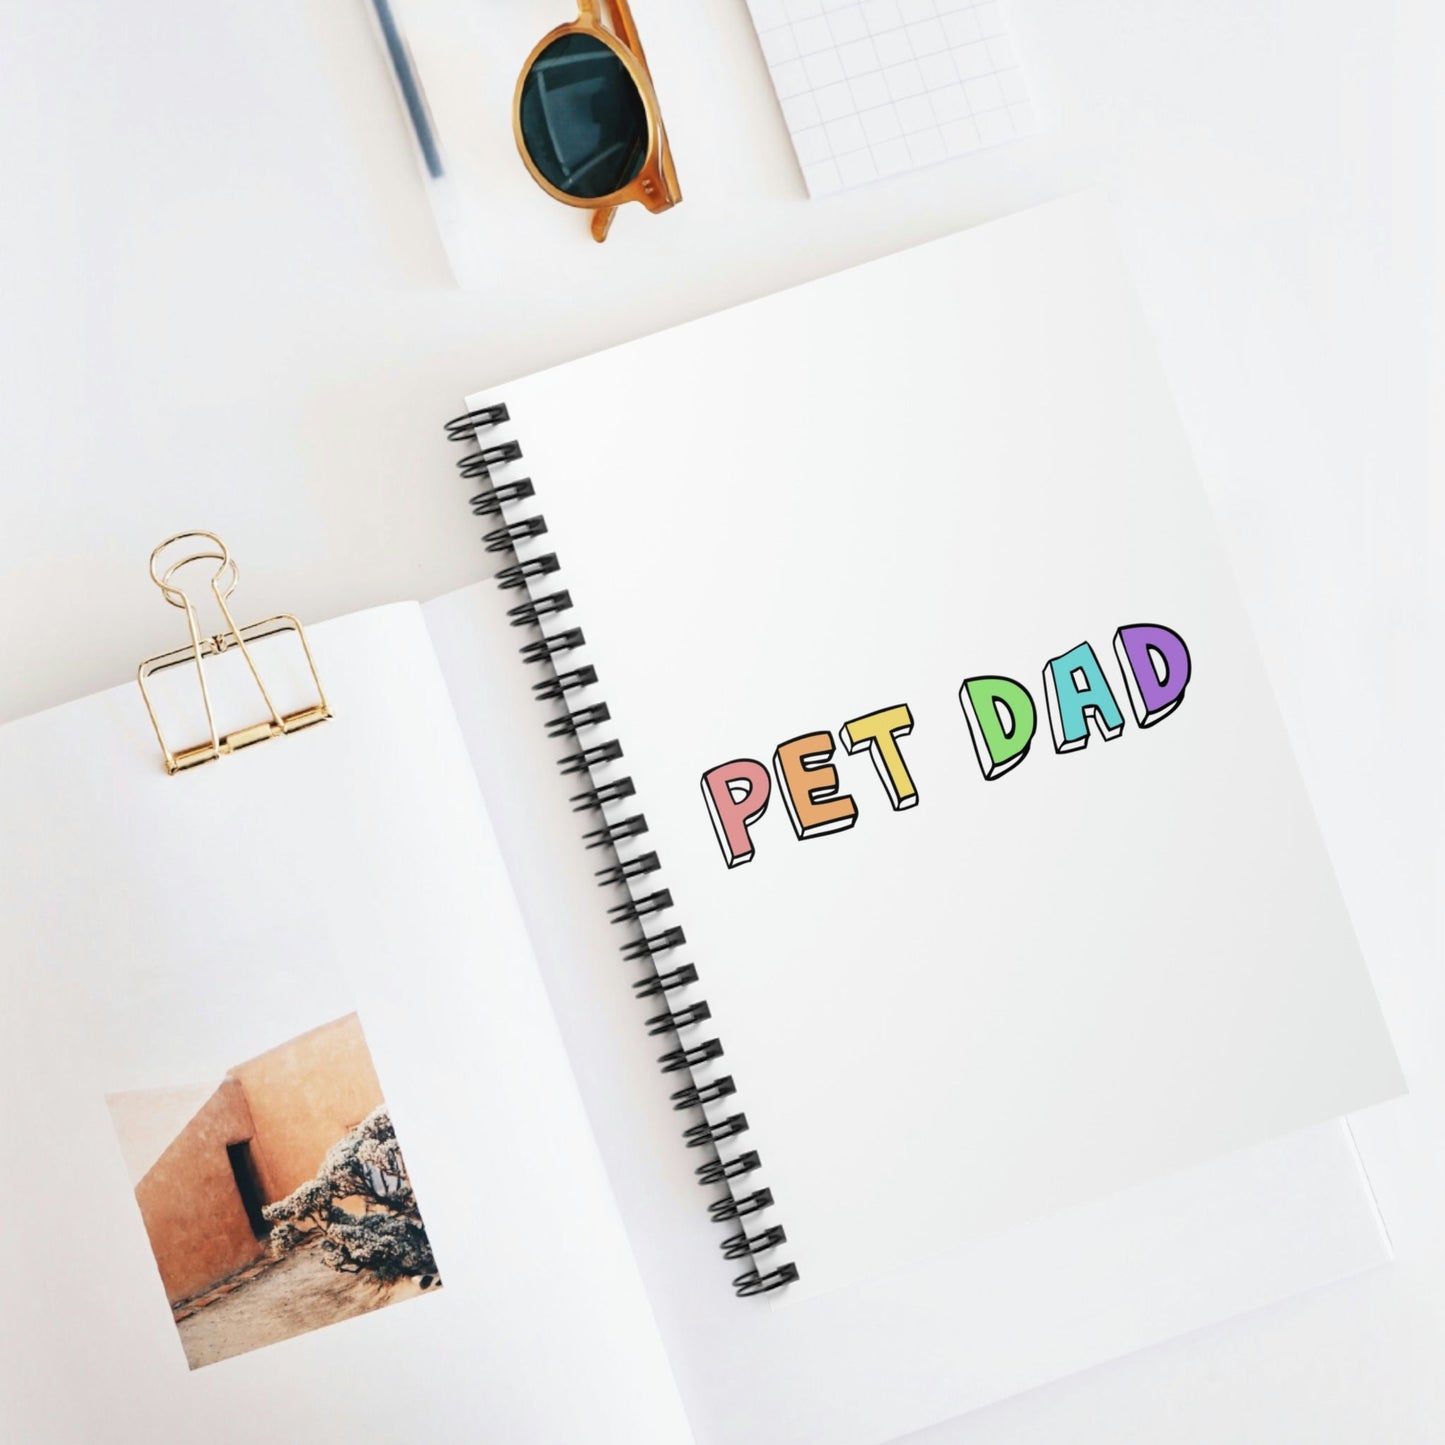 Pet Dad | Notebook - Detezi Designs-69185882329078993552